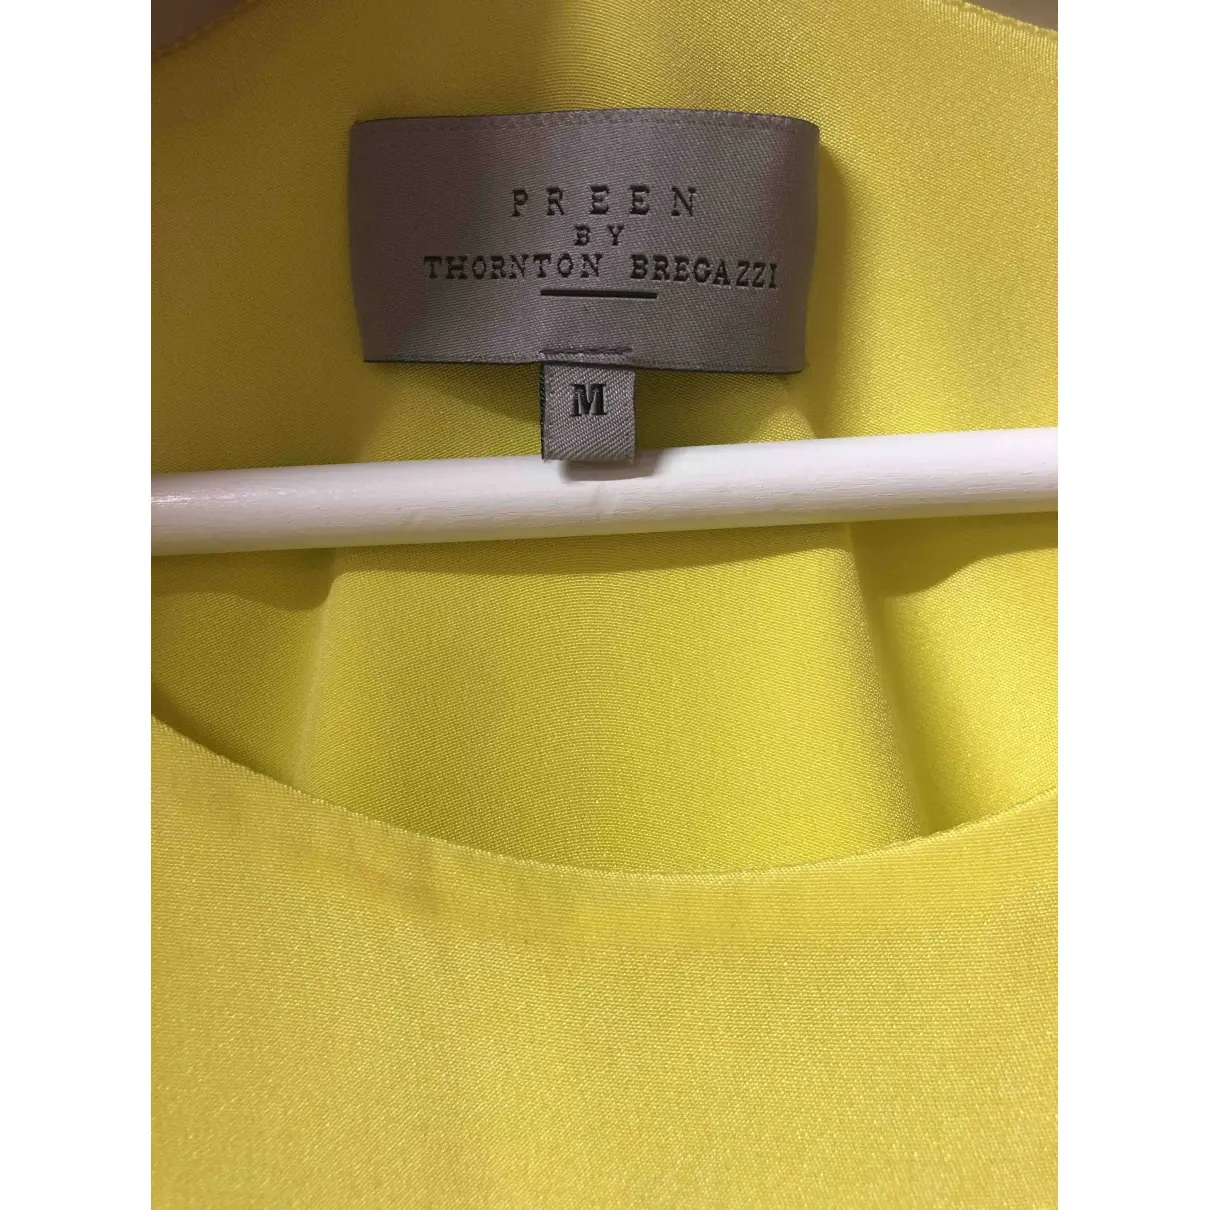 Buy Preen by Thornton Bregazzi Silk maxi dress online